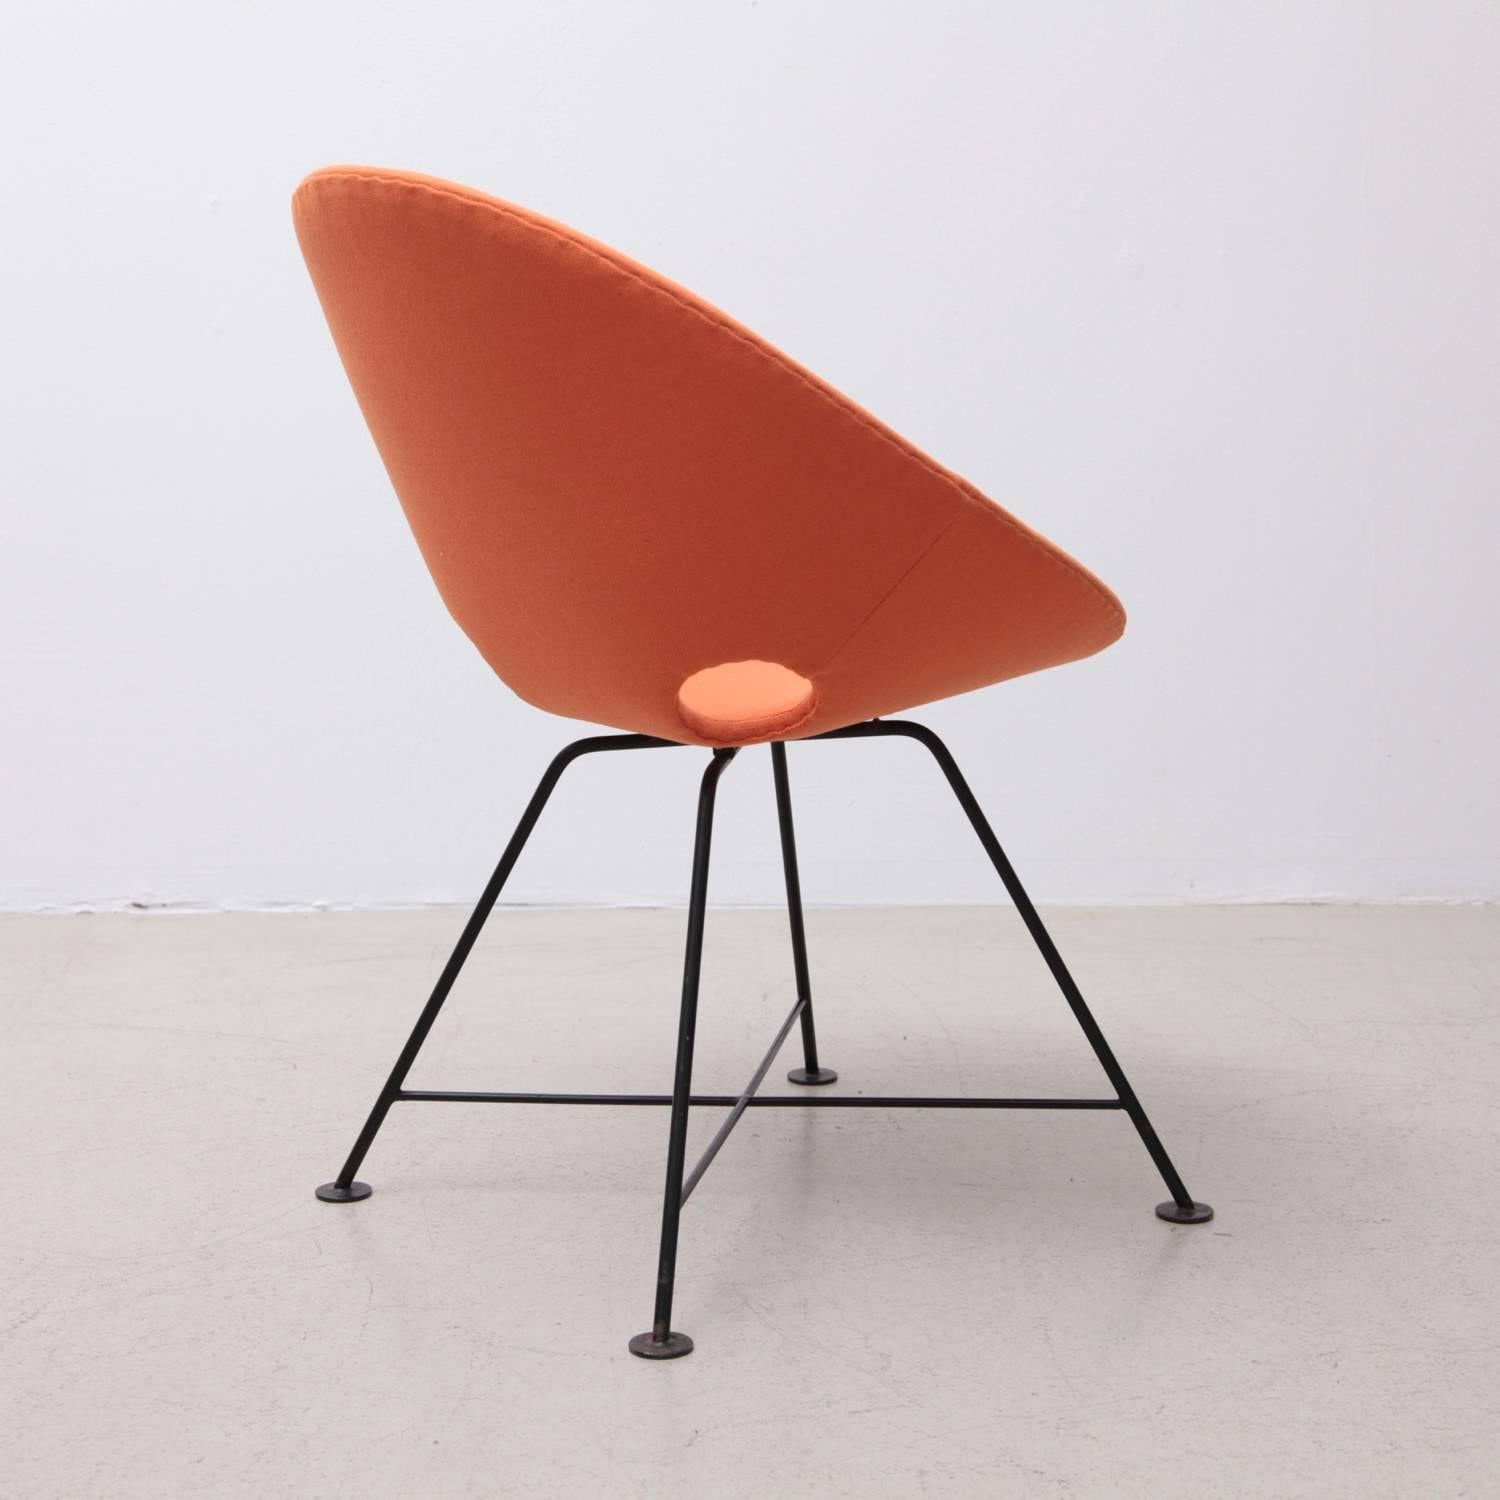 Rare Eddie Harlis chair upholstered in orange fabric for Thonet.

